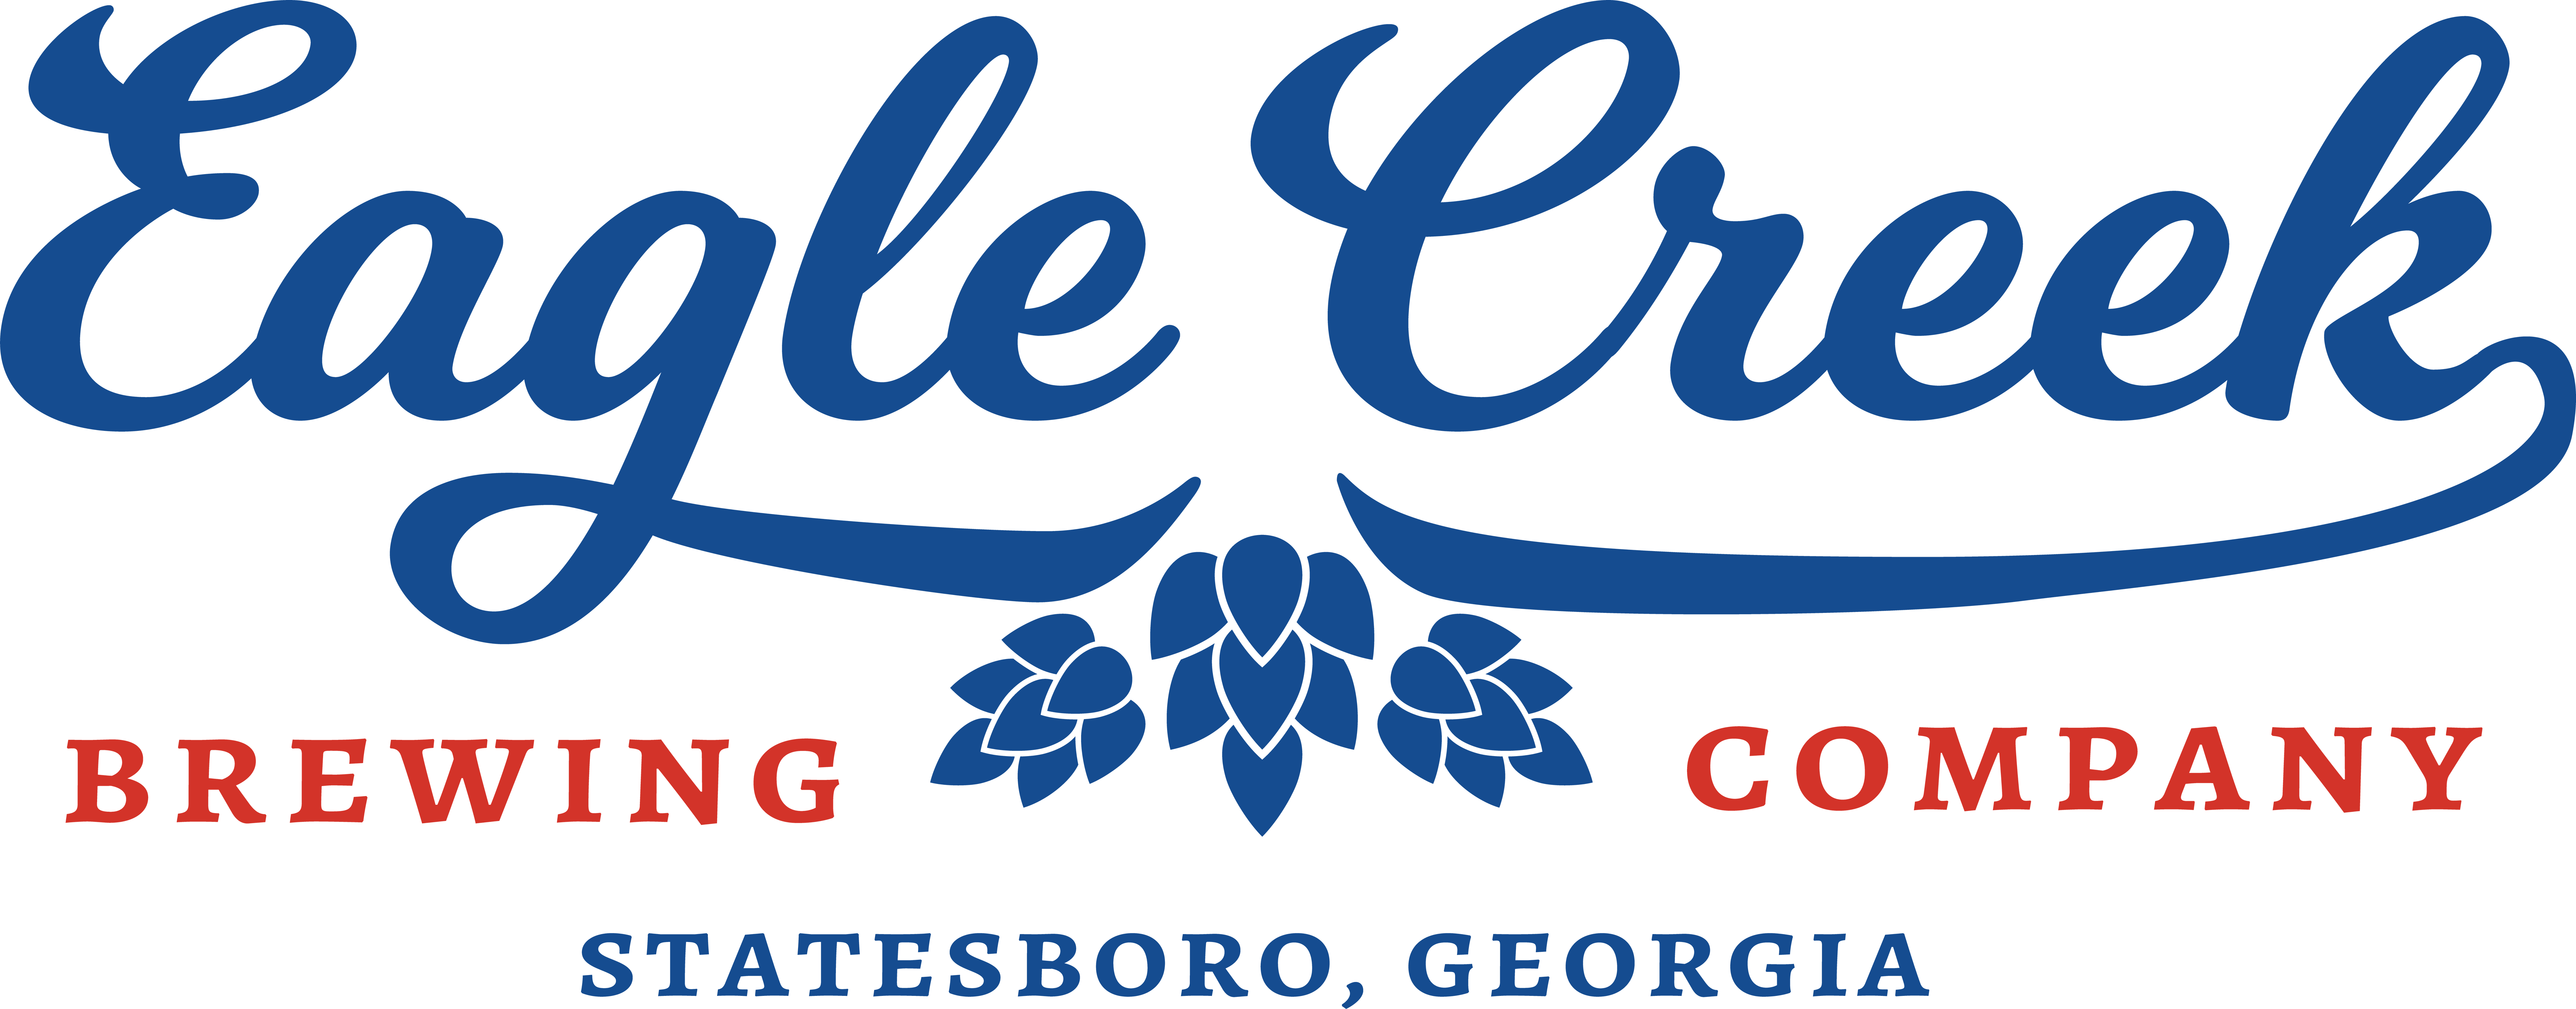 Eagle Creek (company) - Wikipedia